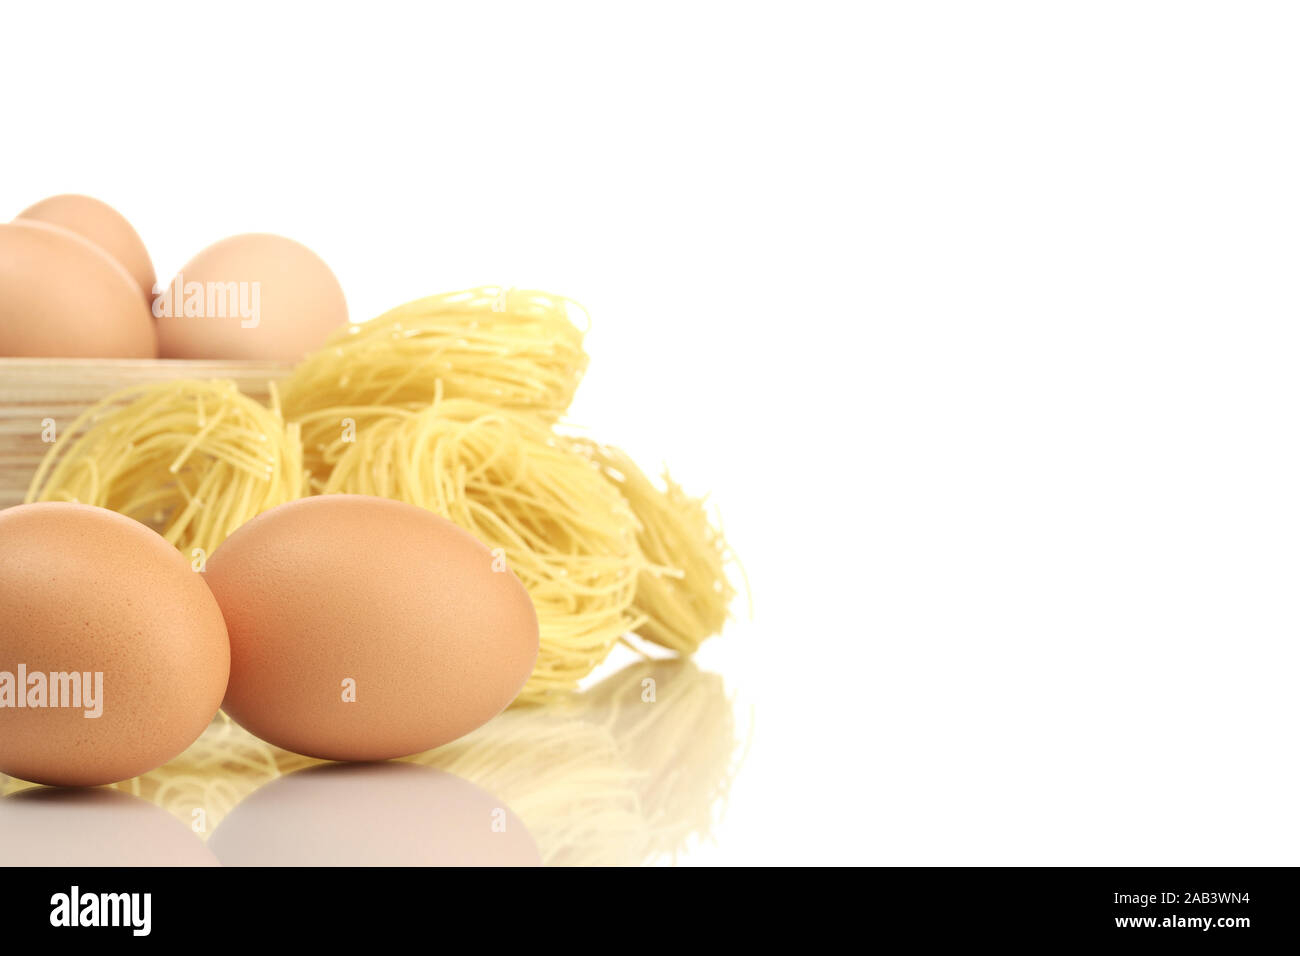 Frische Eier mit Nudeln |Fresh egg with noodles| Stock Photo